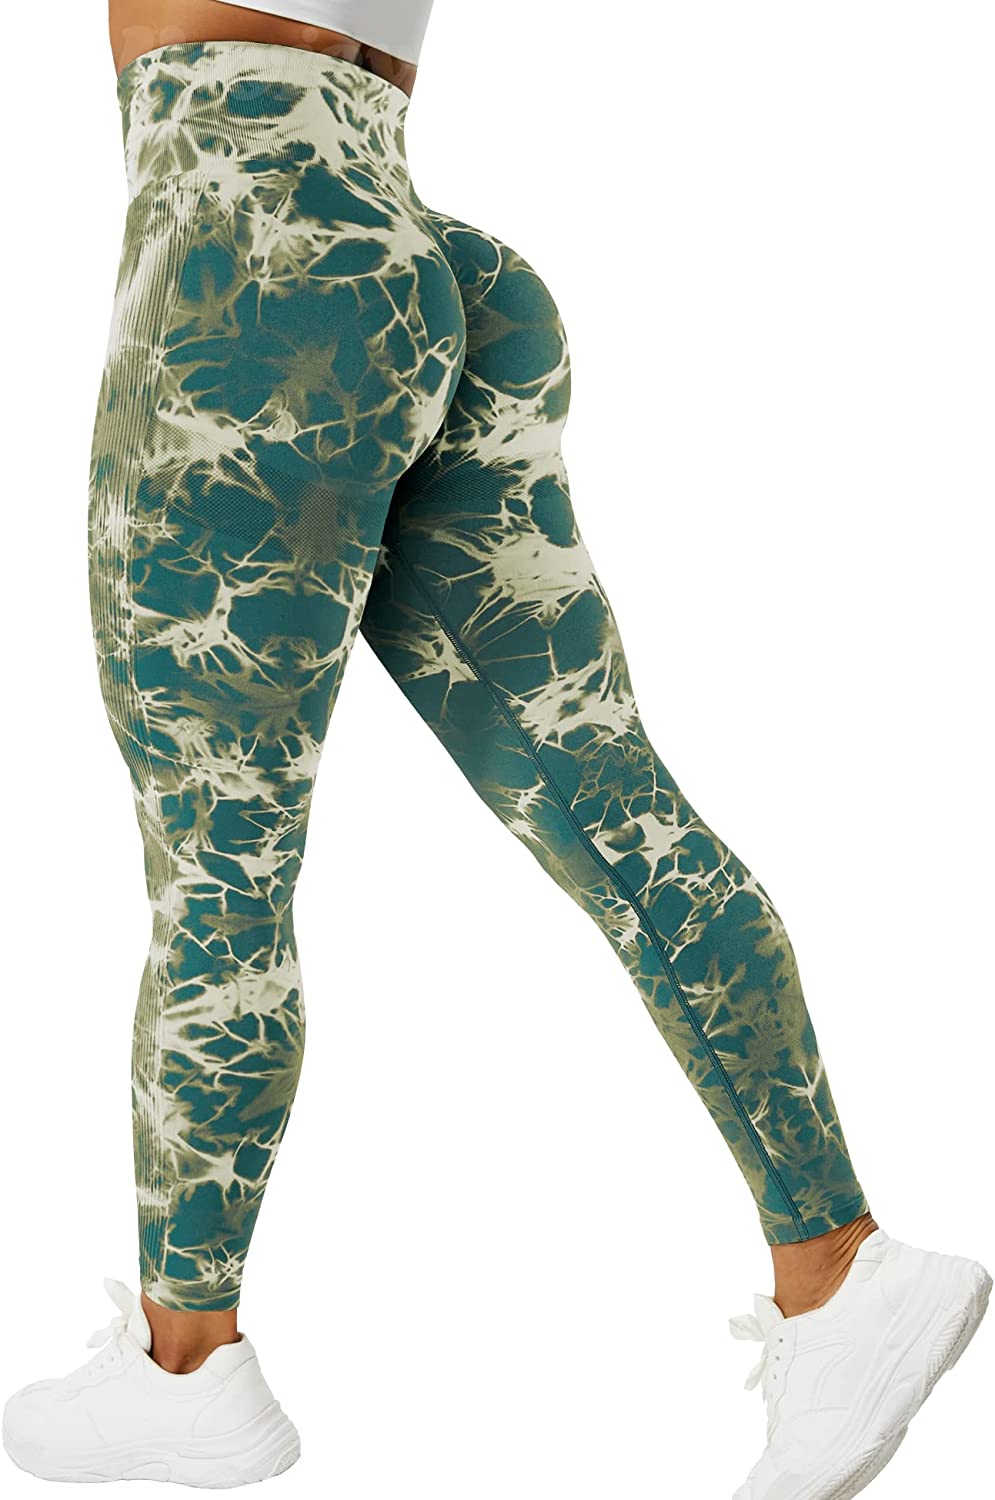 VOYJOY Tie Dye Seamless Leggings for Women High Waist Yoga Pants